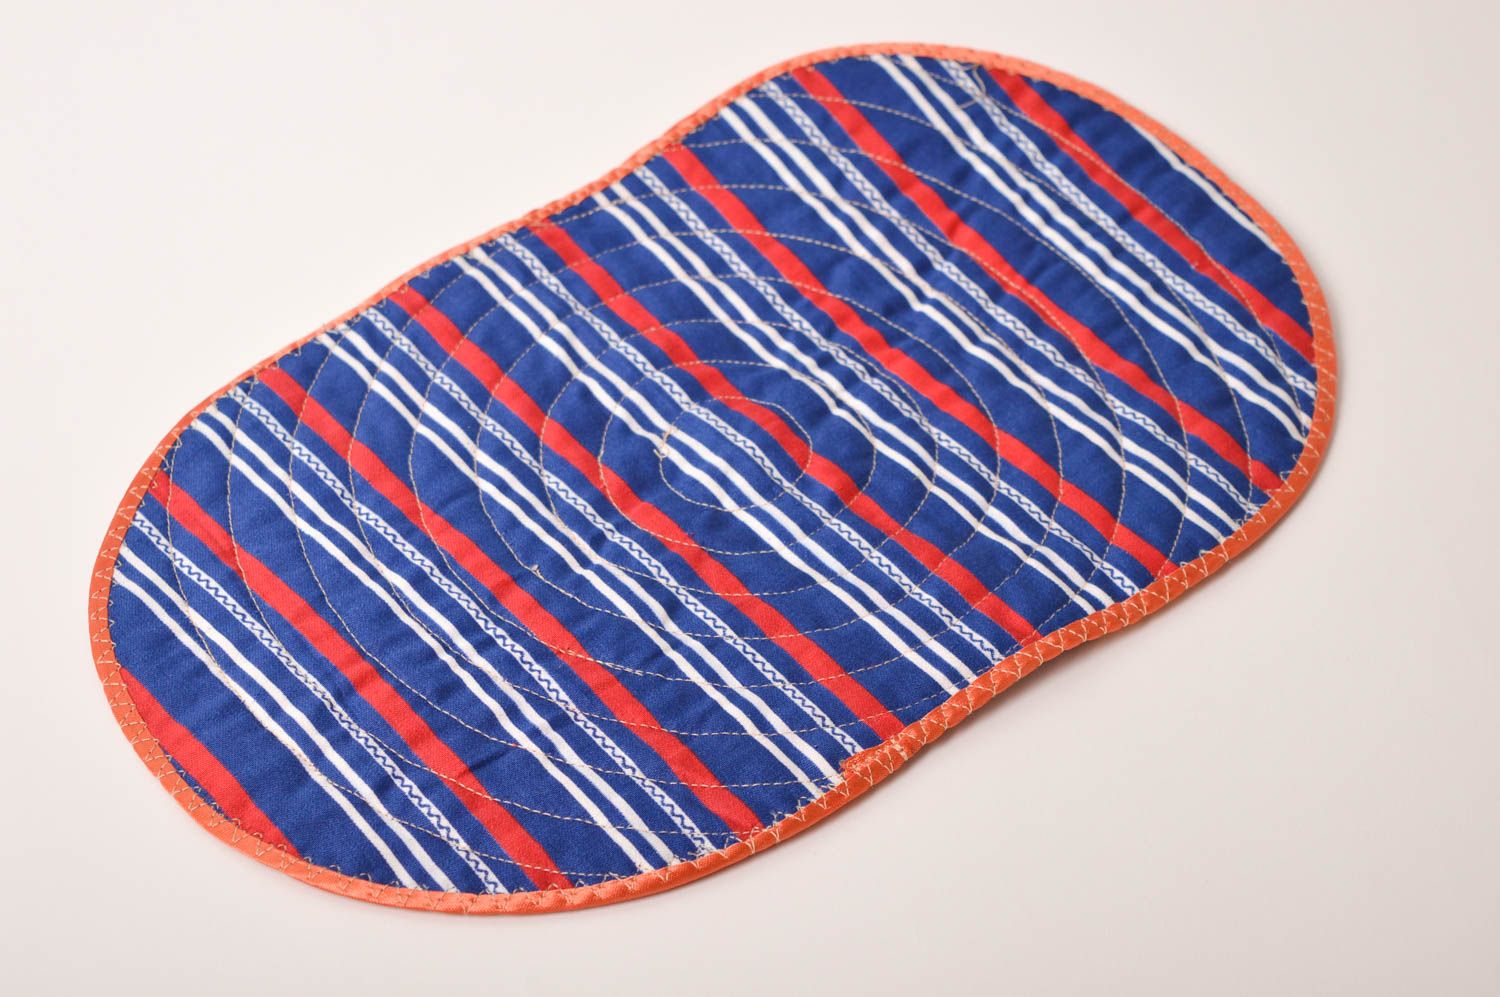 Bright handmade textile coaster hot pads kitchen design table setting ideas photo 4